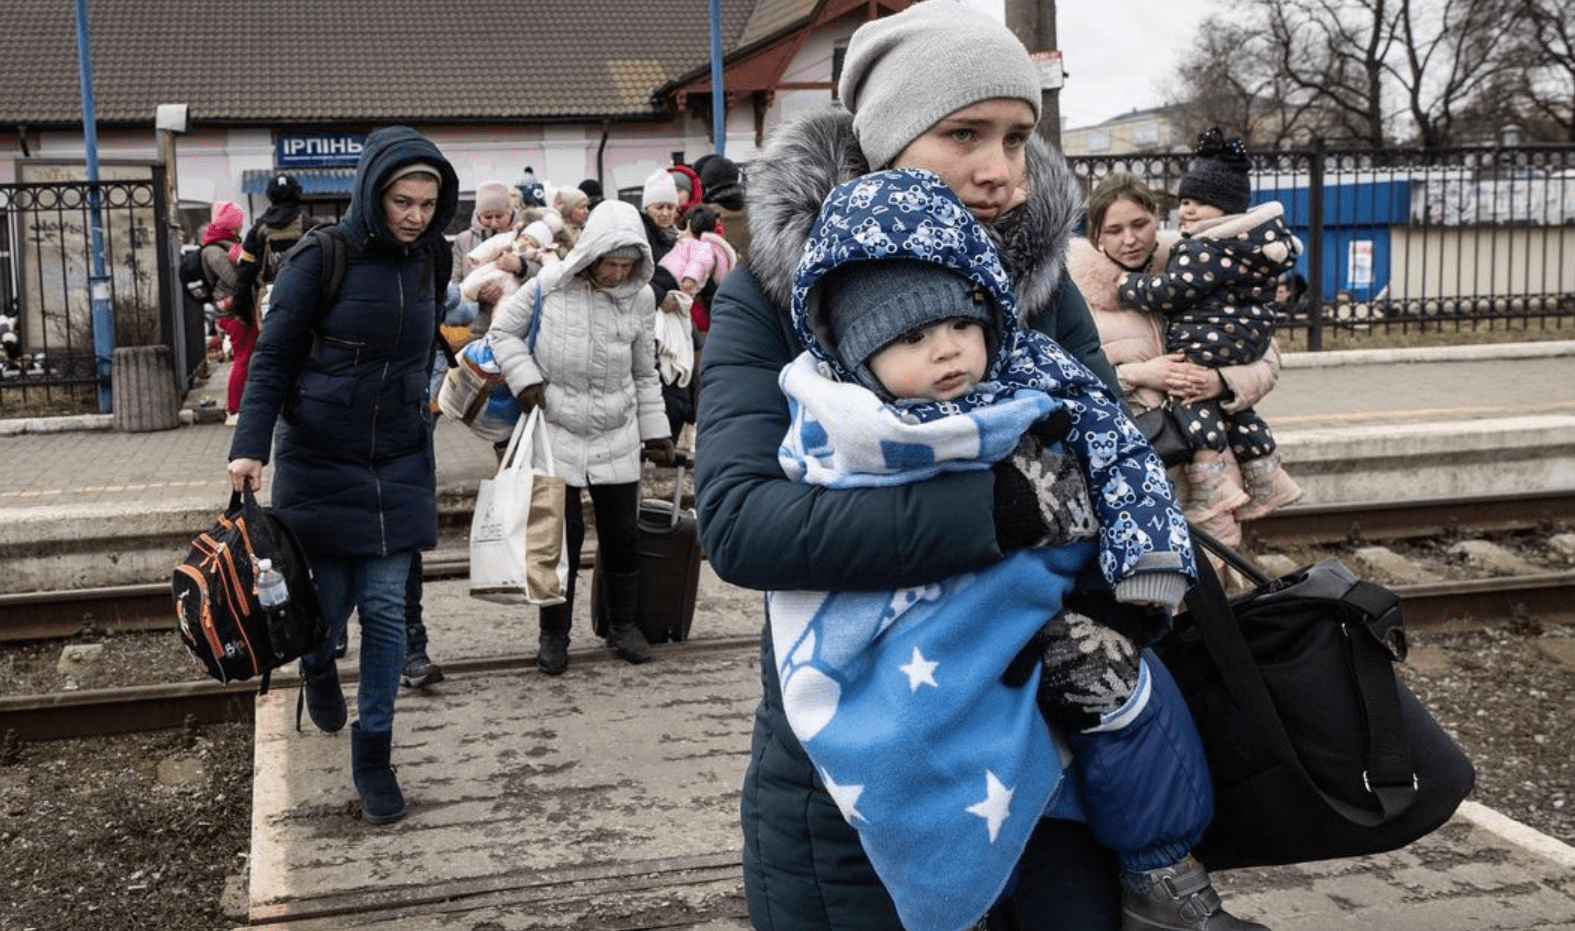 refugees walking with belongings